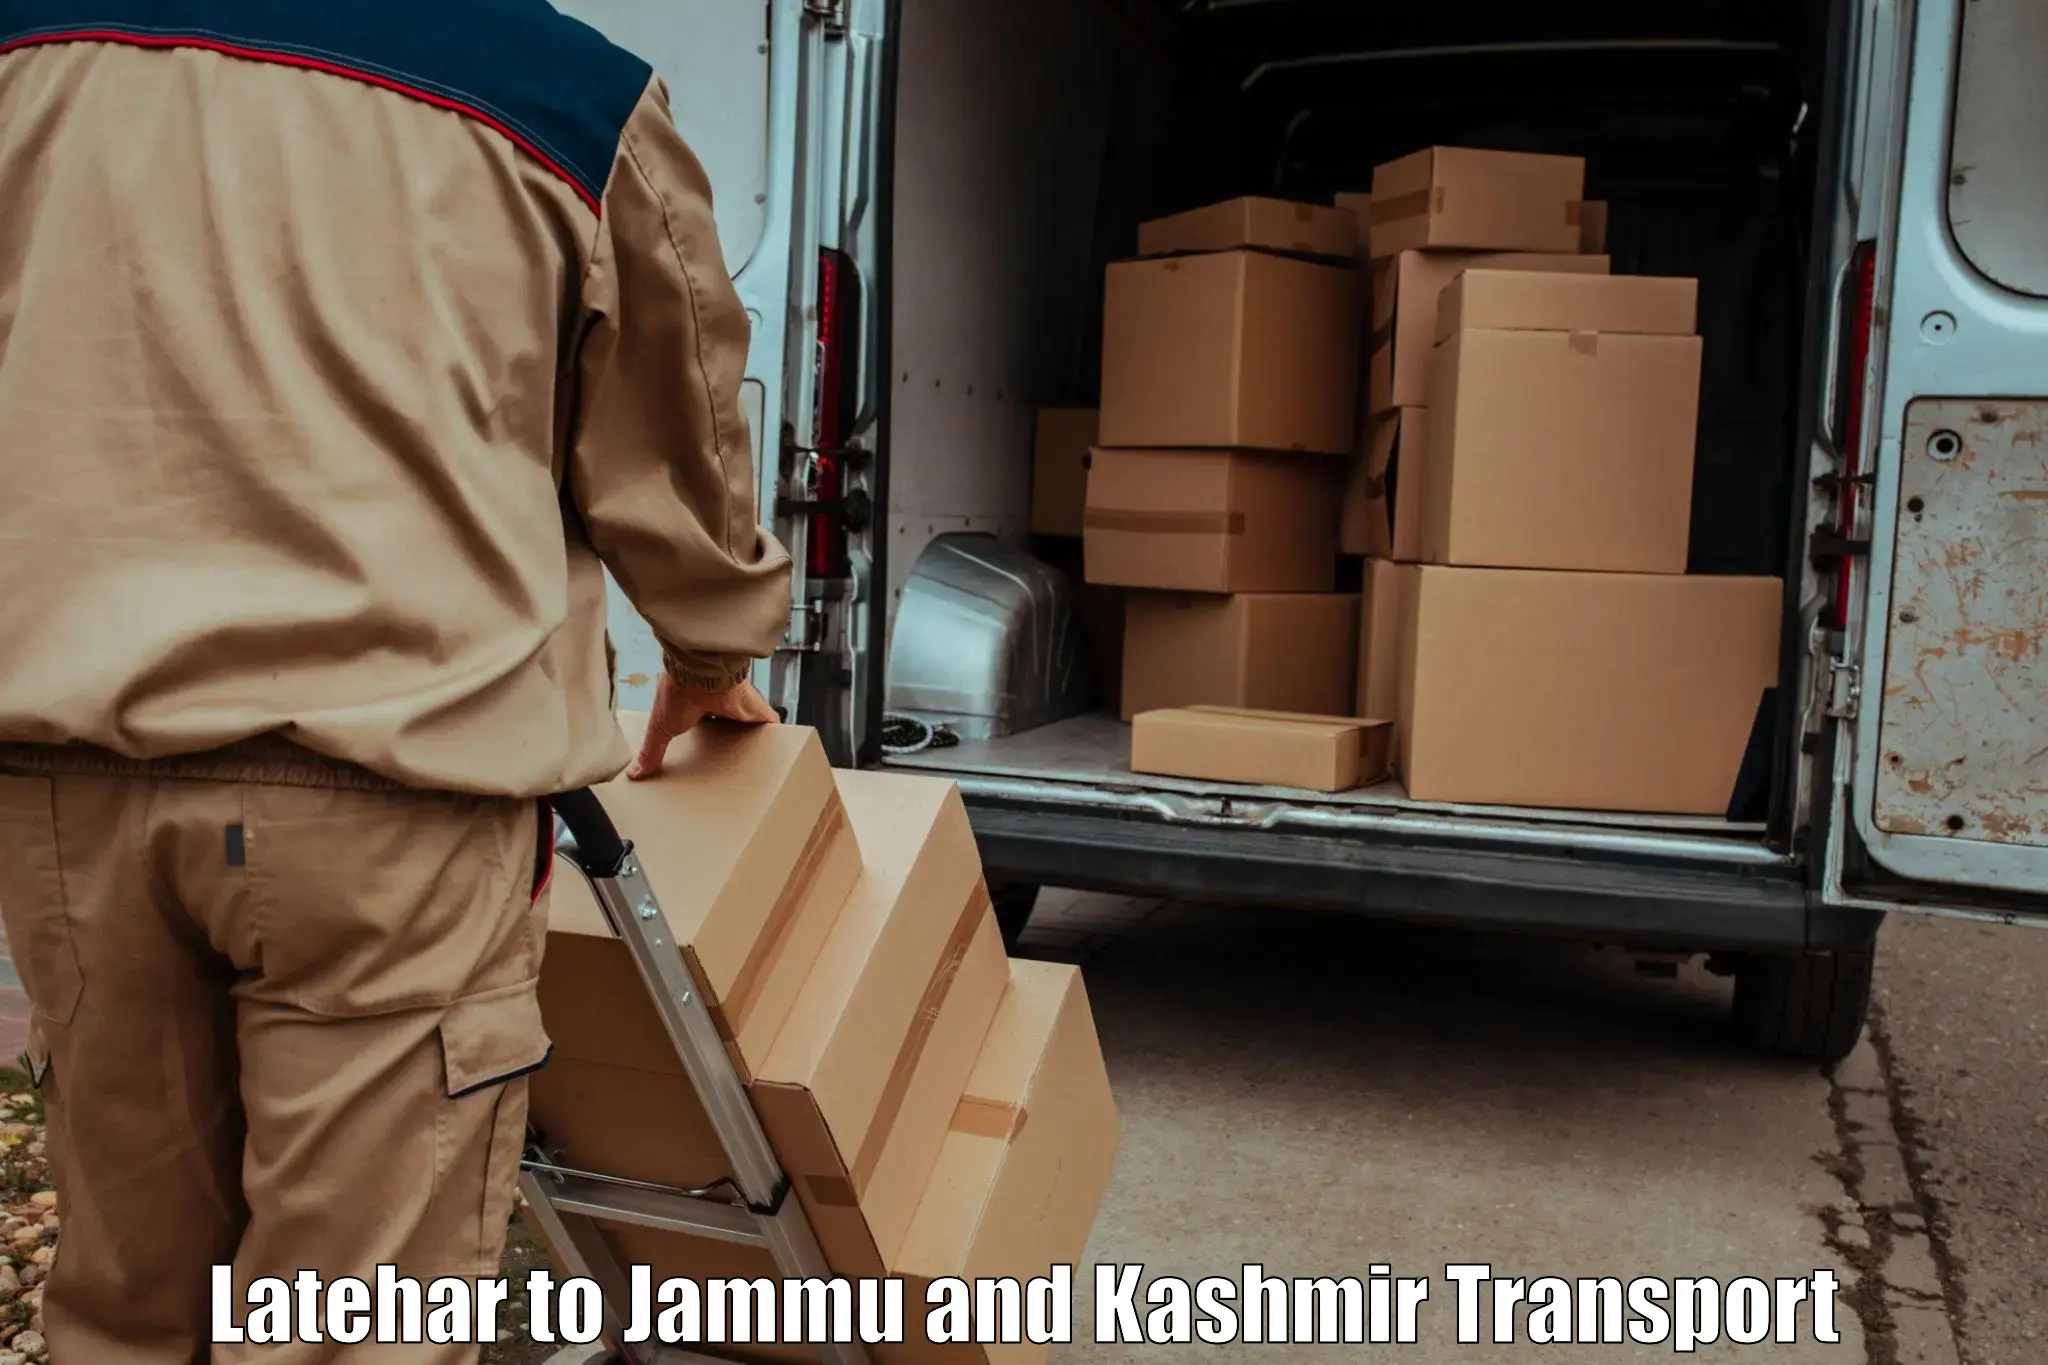 Delivery service Latehar to Baramulla